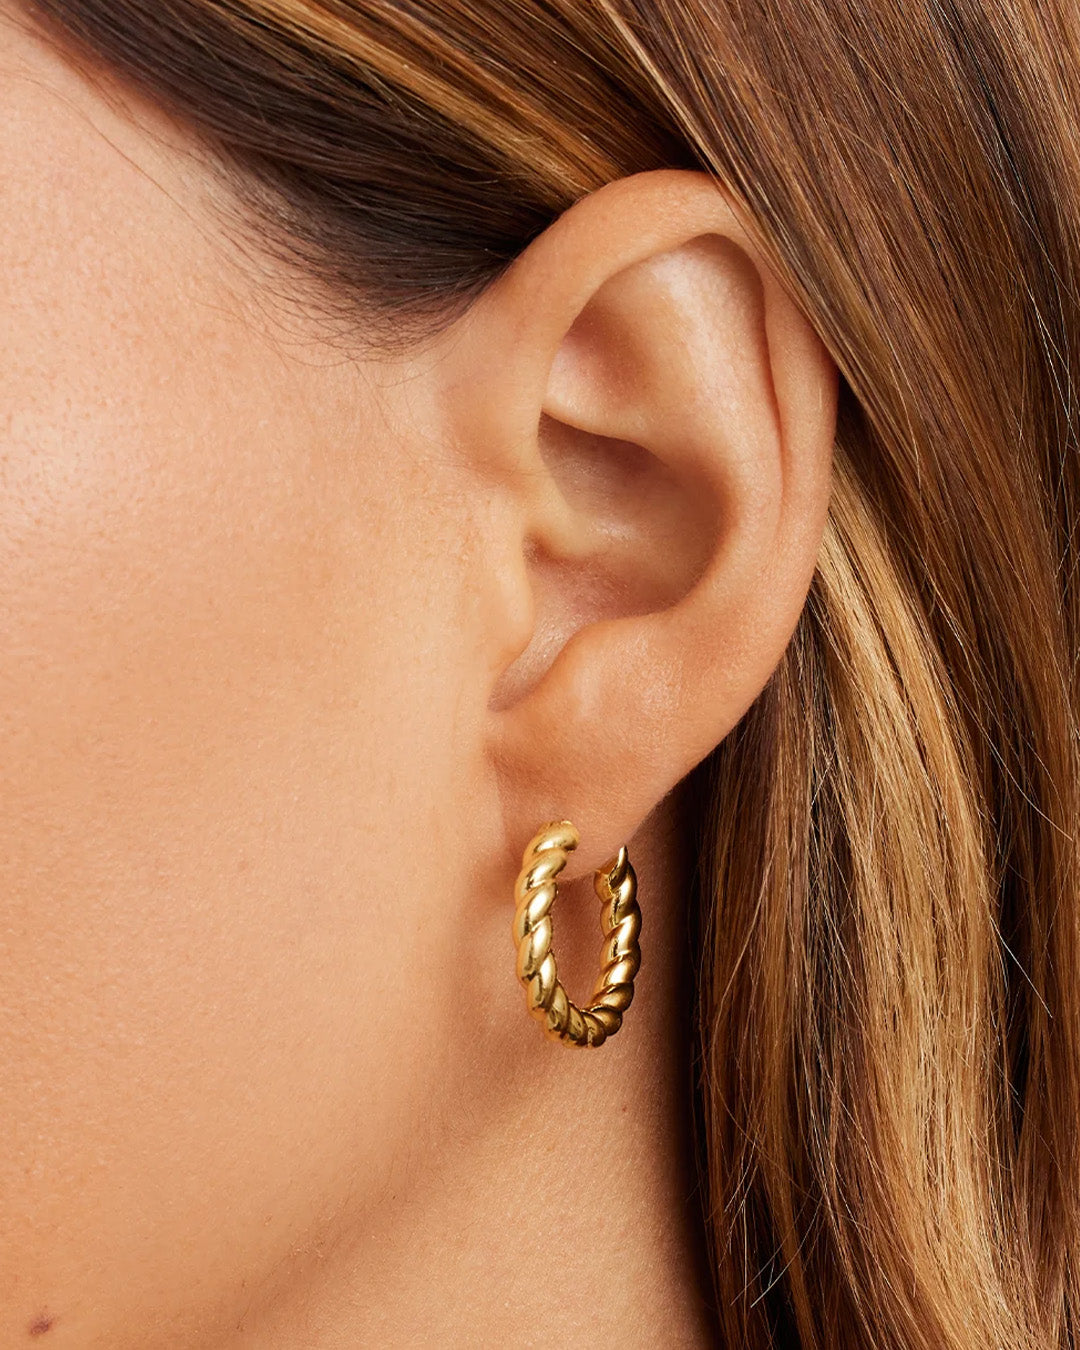 Girls Classic Hoop Earrings - 13 mm | 14K Gold